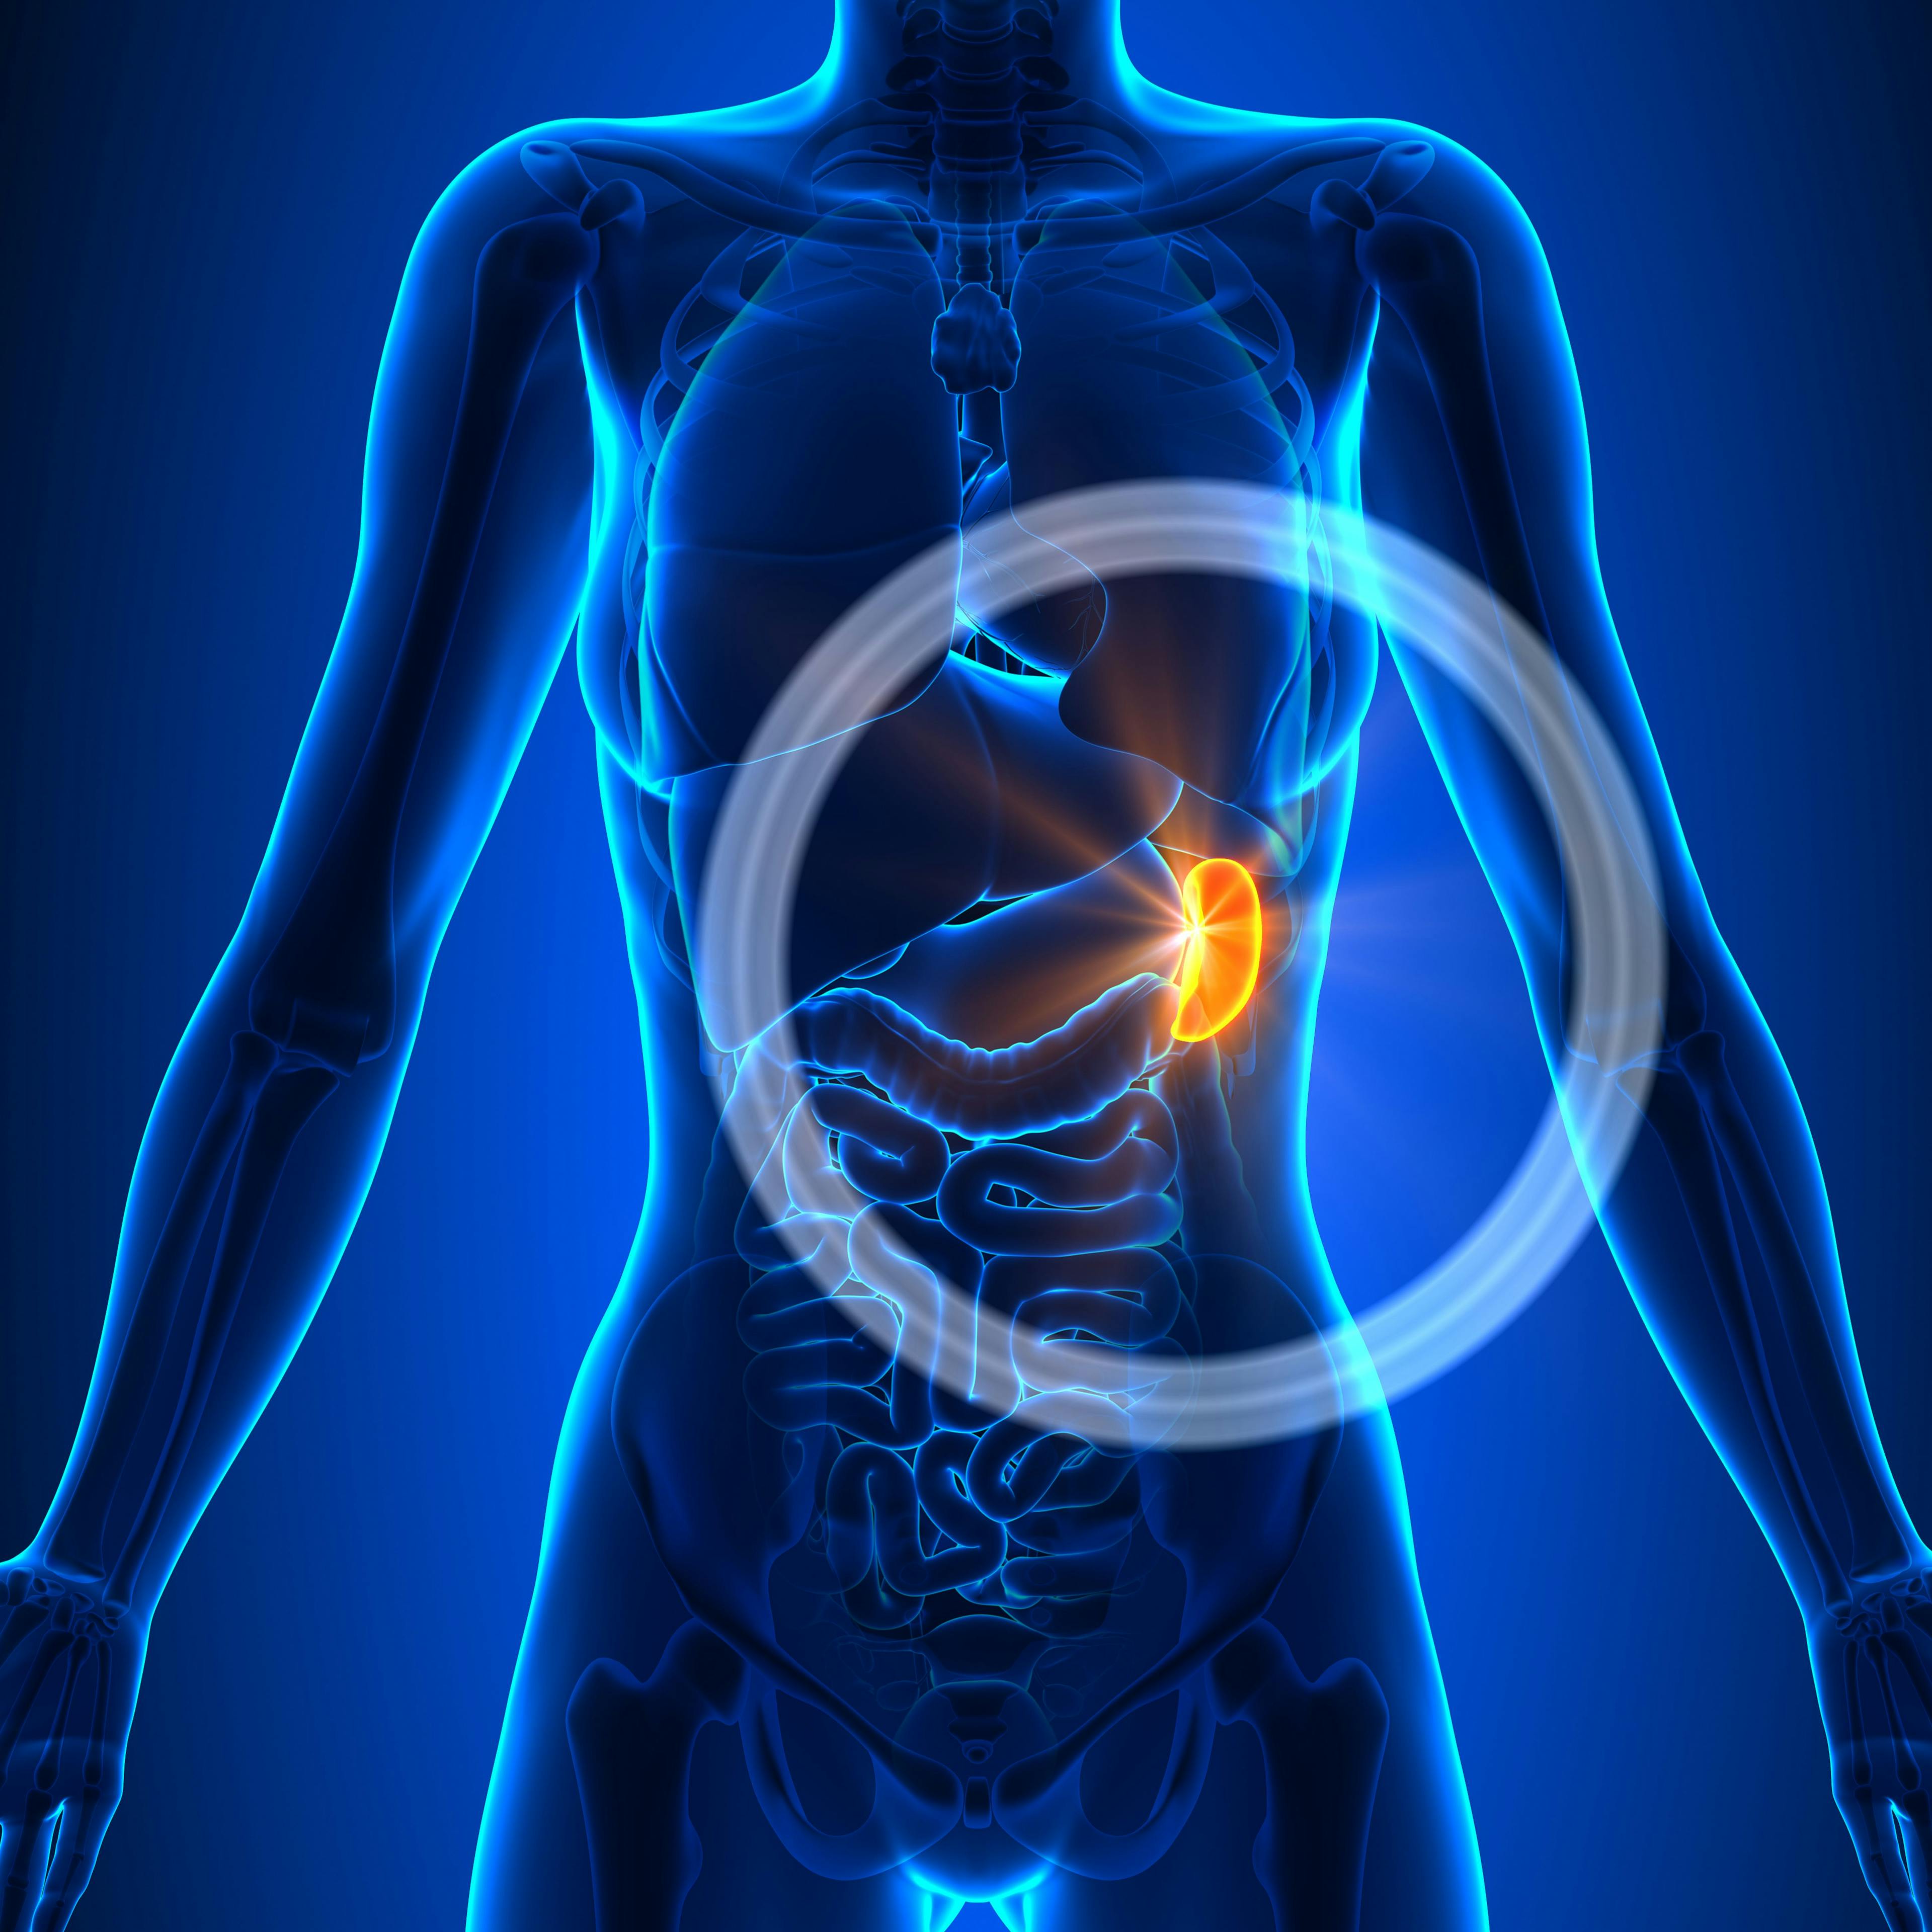 Spleen - Female Organs - Human Anatomy | Image Credit: © decade3d - © stock.adobe.com